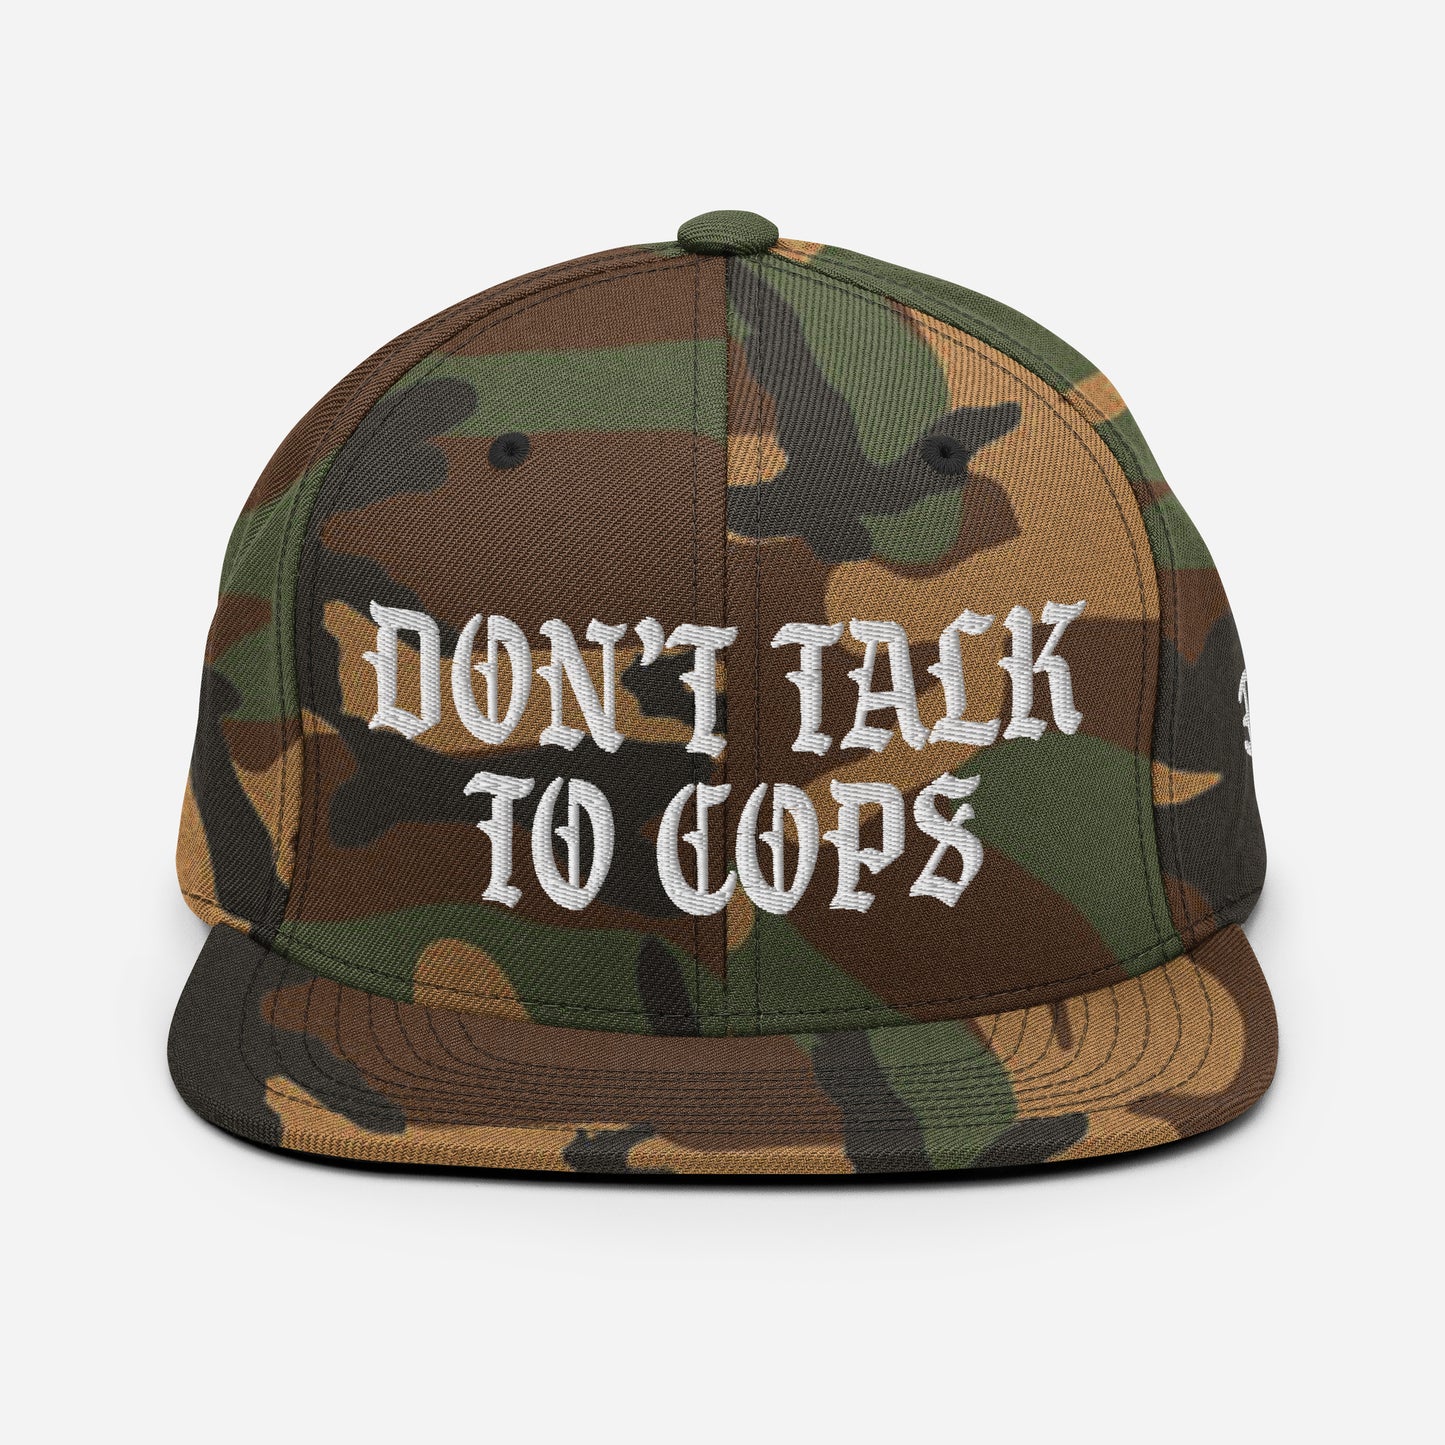 Don't Talk To Cops Snapback Hat